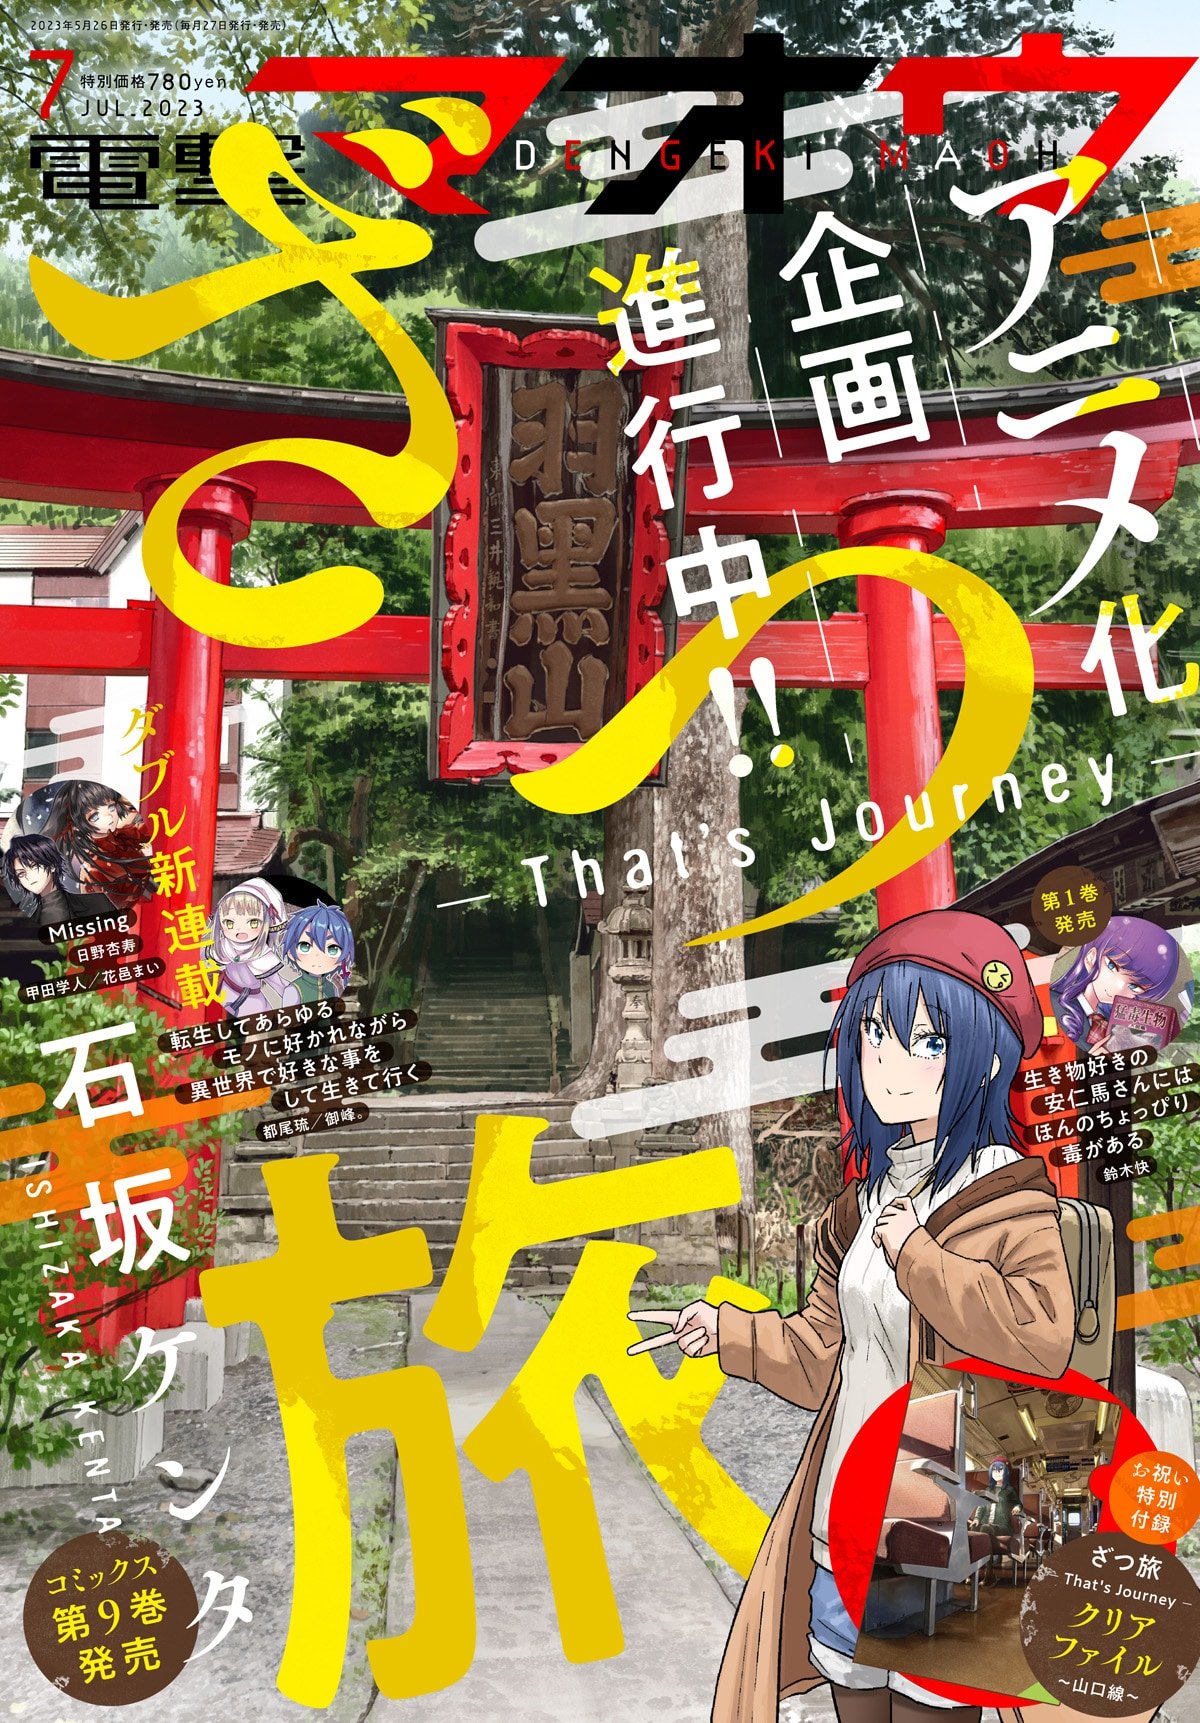 Kenta Ishizaka's Travel Manga 'Zatsu Tabi -That's Journey-' Gets Anime